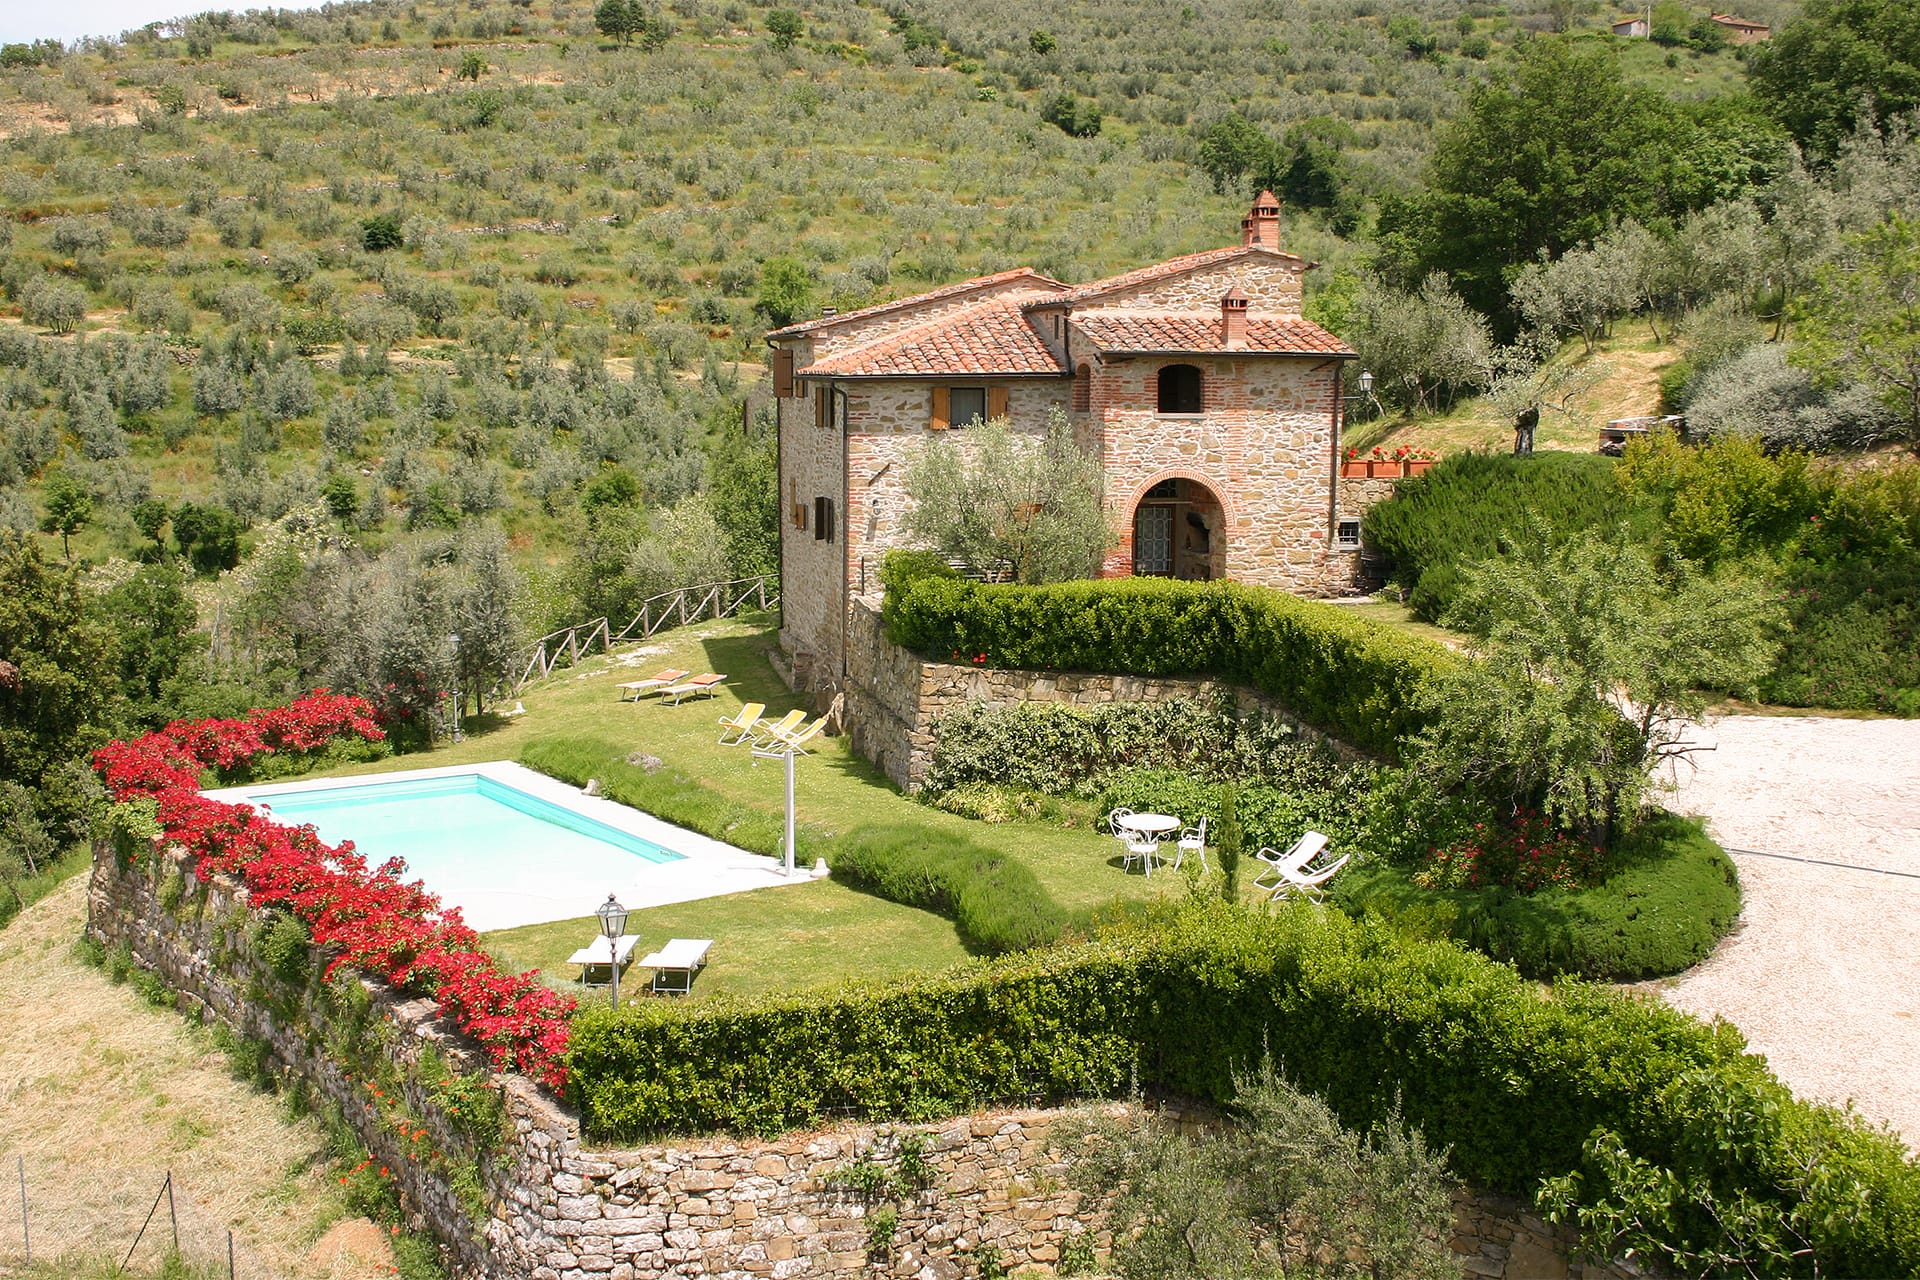 138_4ead16c_Borgo Guardata Luxe vakantiehuizen met prive zwembad Castiglion Fiorentino Toscane